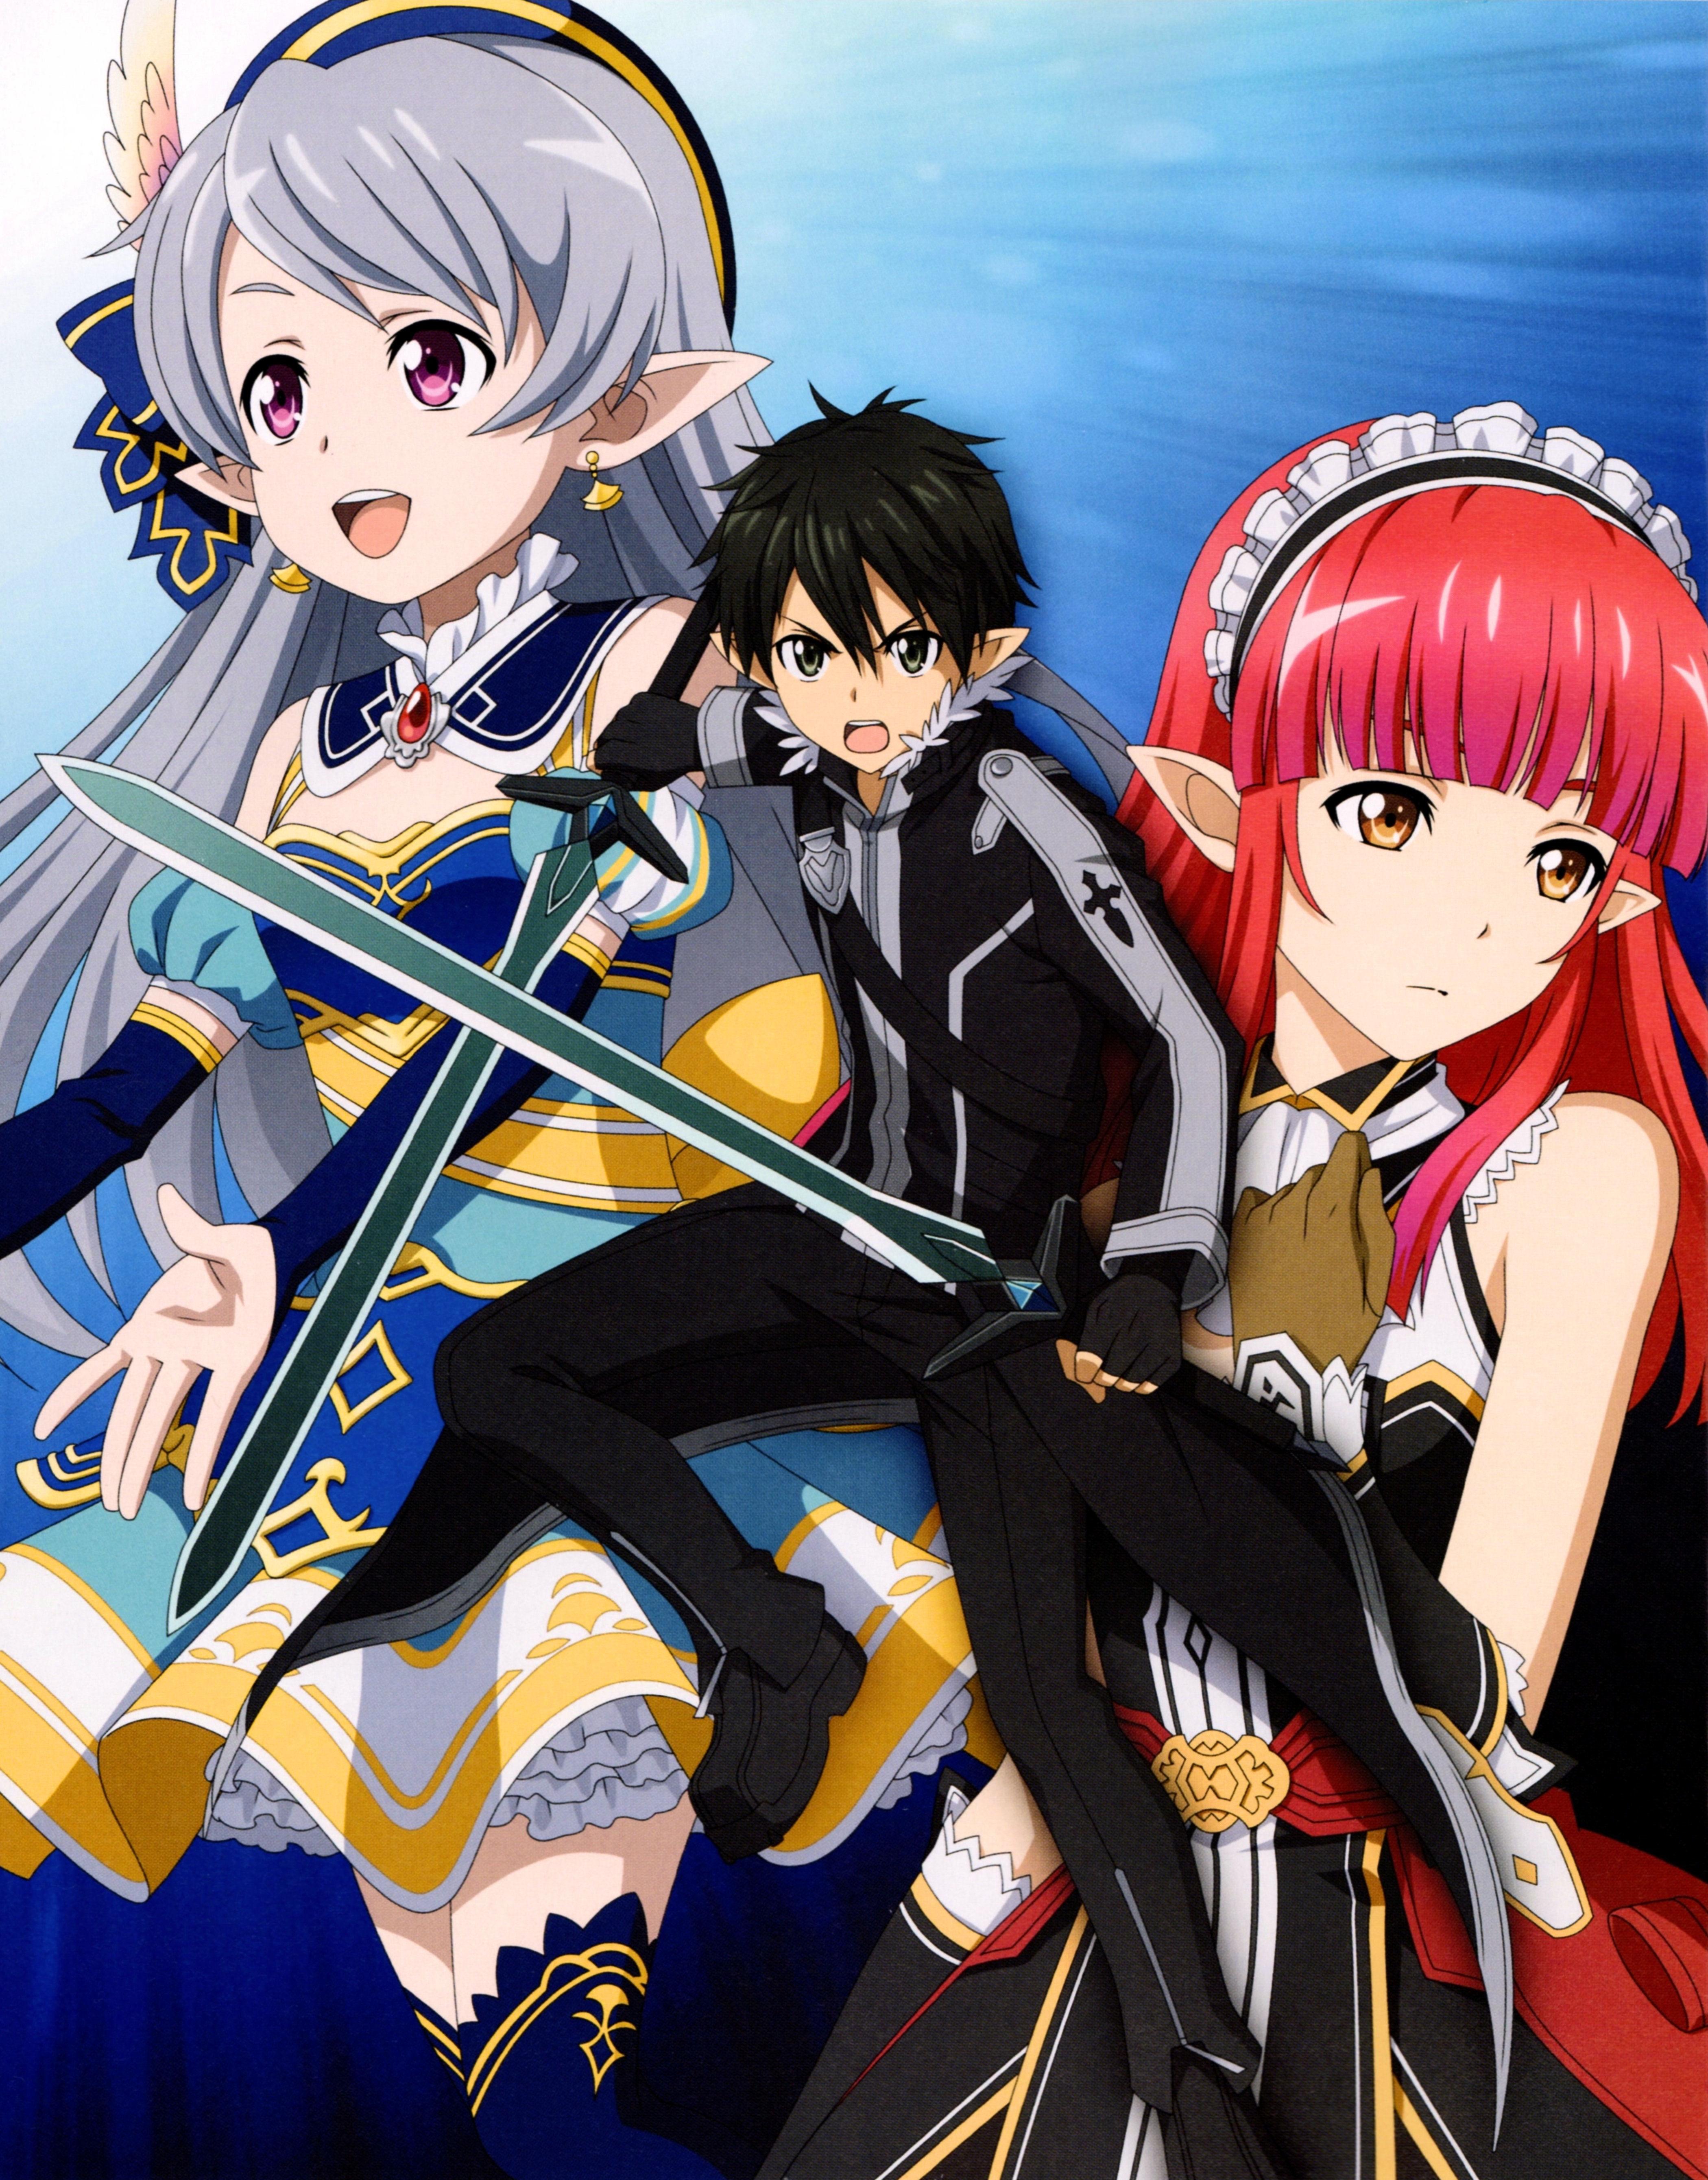 Sword Art Online: Lost Song Anime Image Board